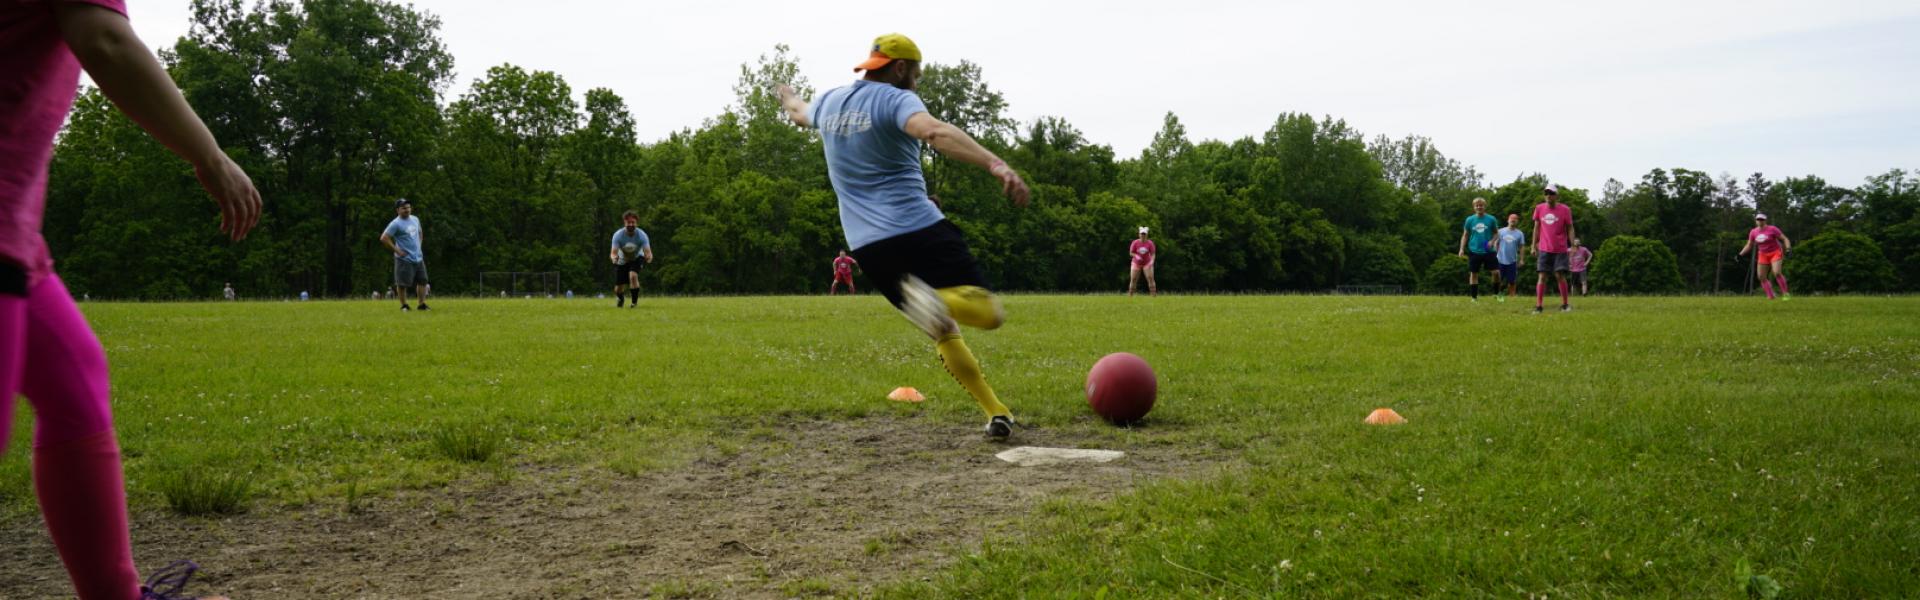 Ithaca Kickball in Action